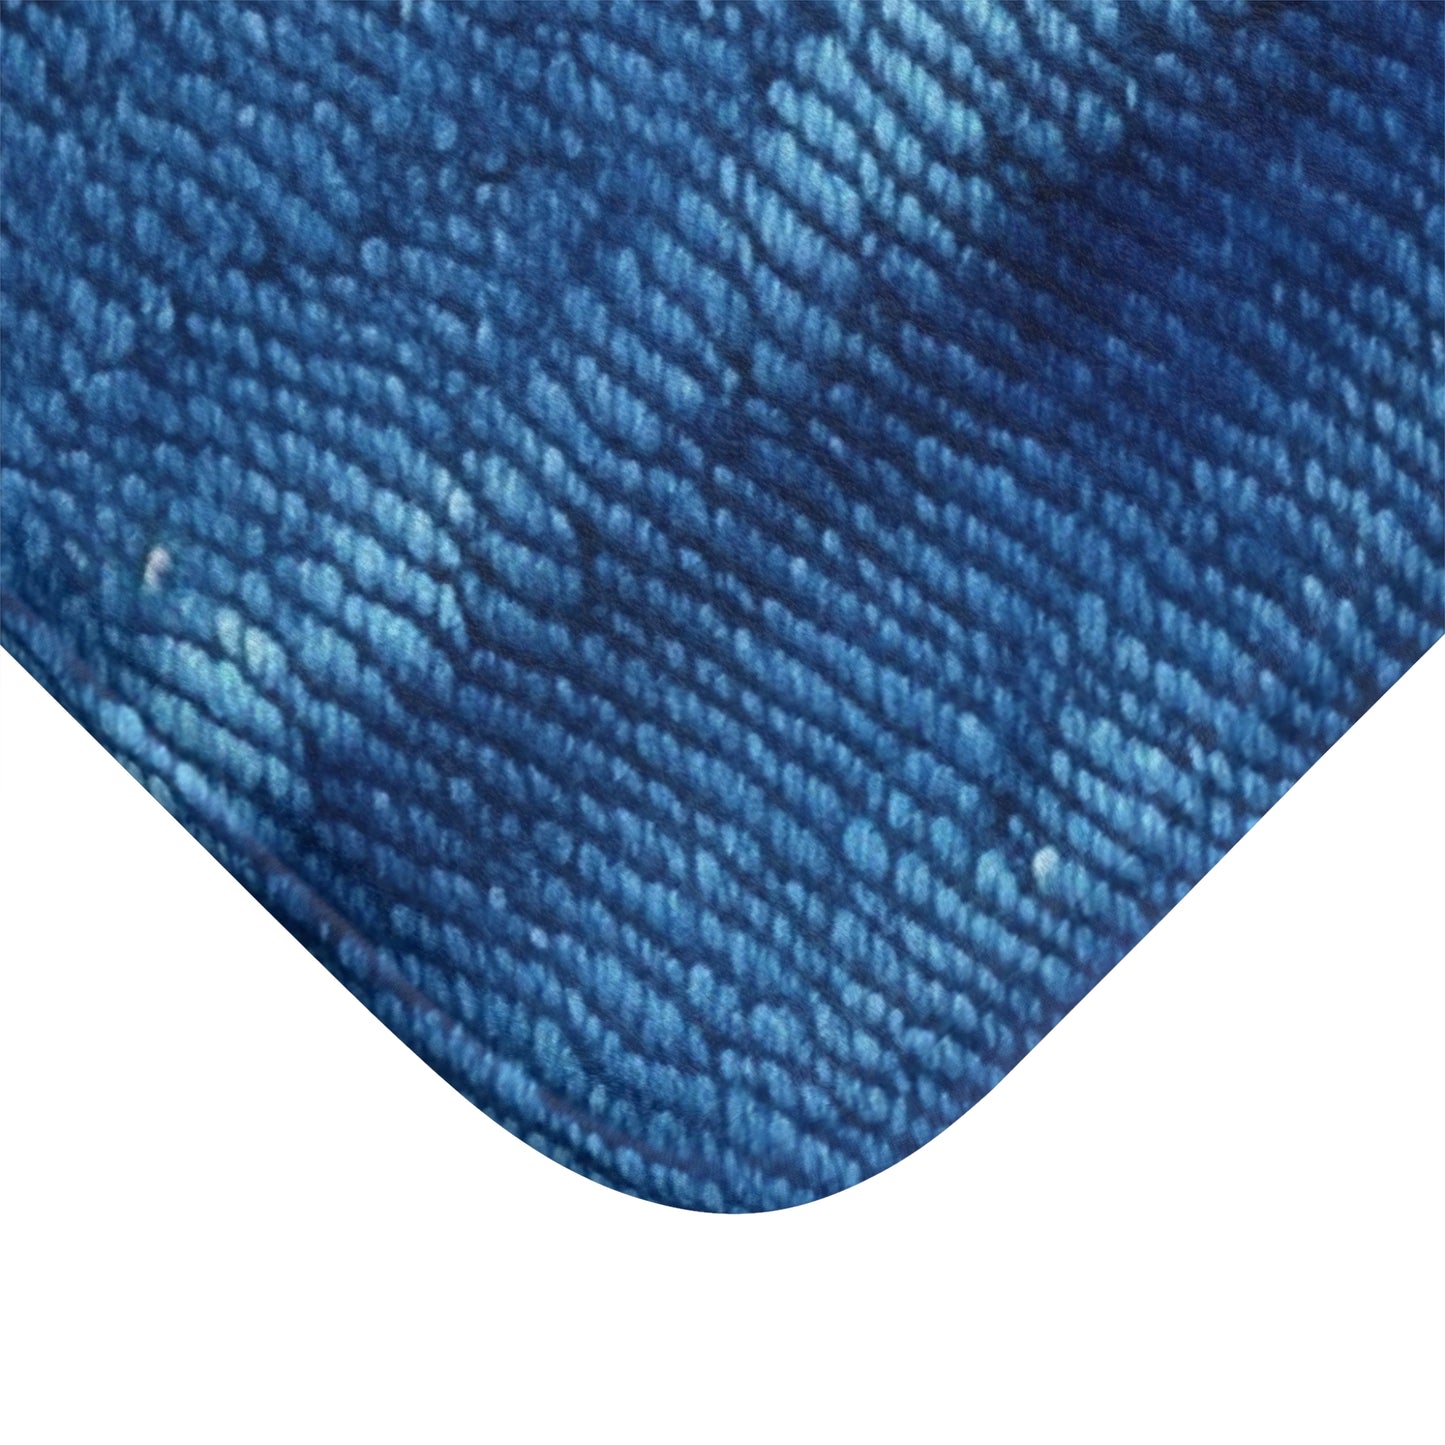 Blue Spectrum: Denim-Inspired Fabric Light to Dark - Bath Mat